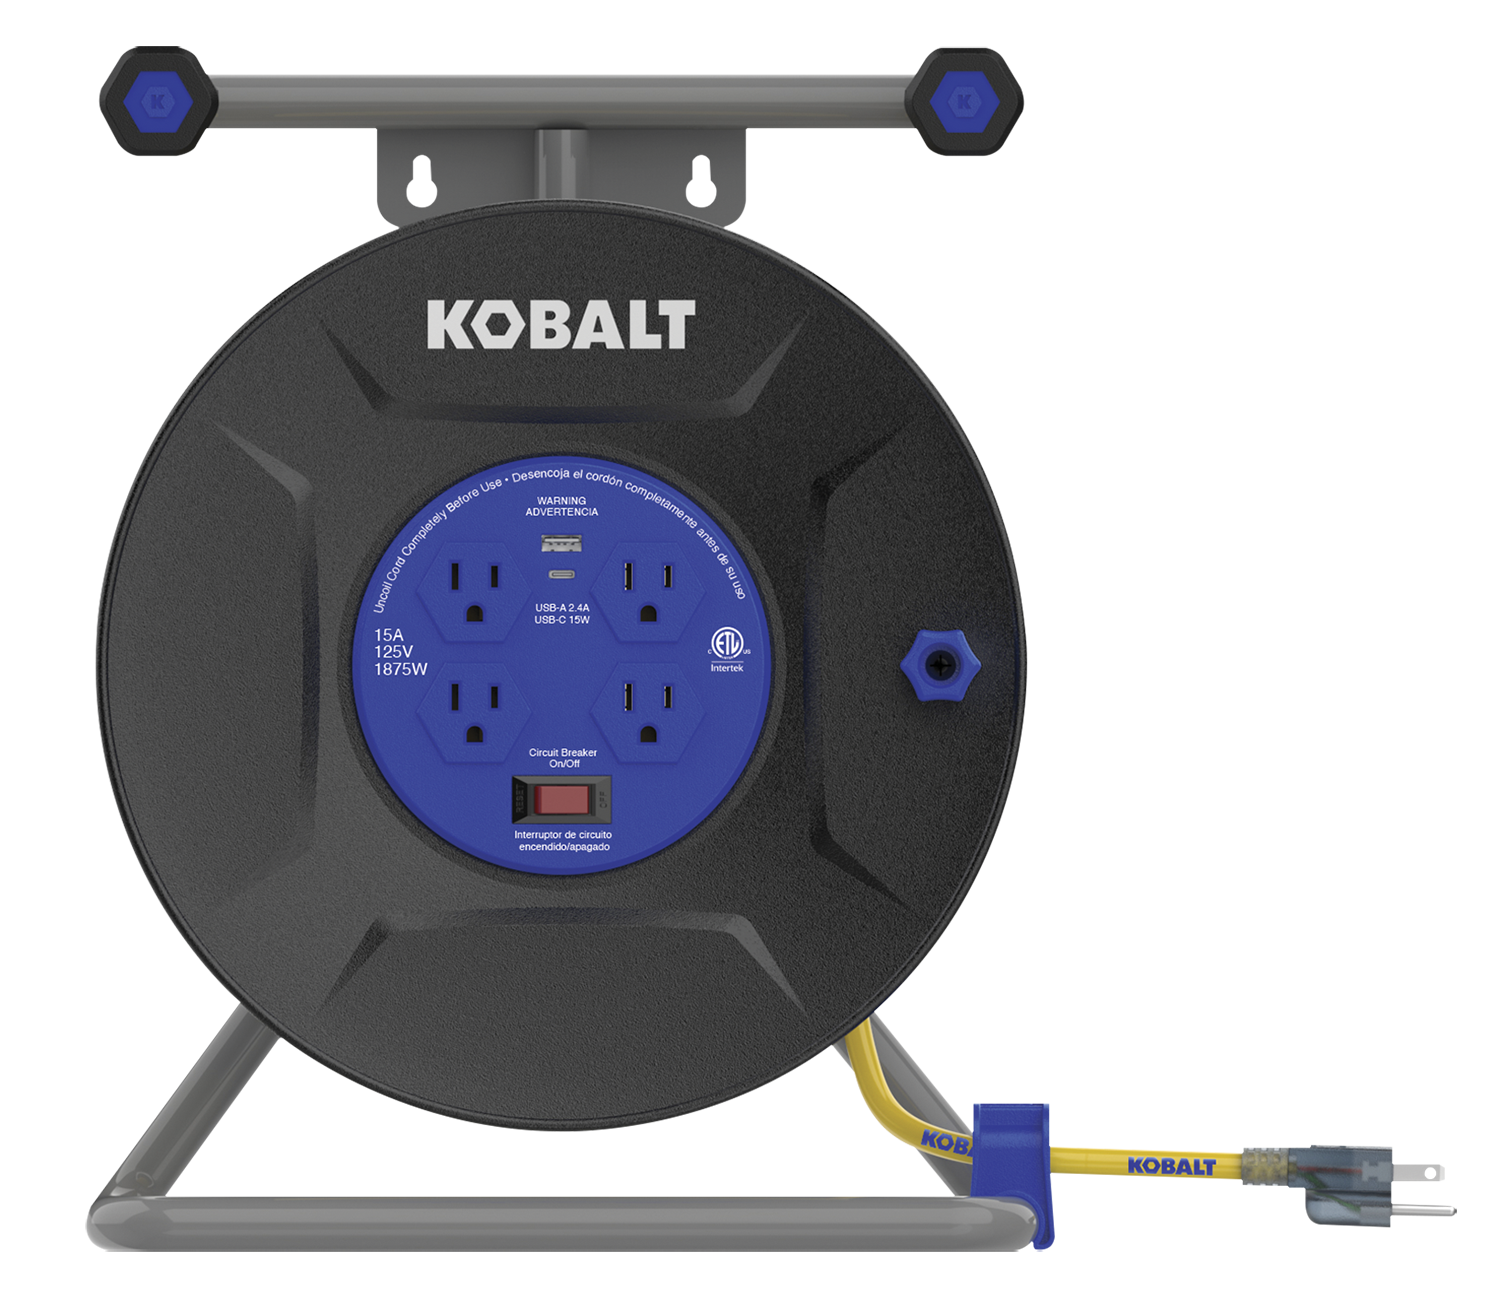 Kobalt Kobalt 50 Ft. Retractable Cord Reel in the Extension Cord